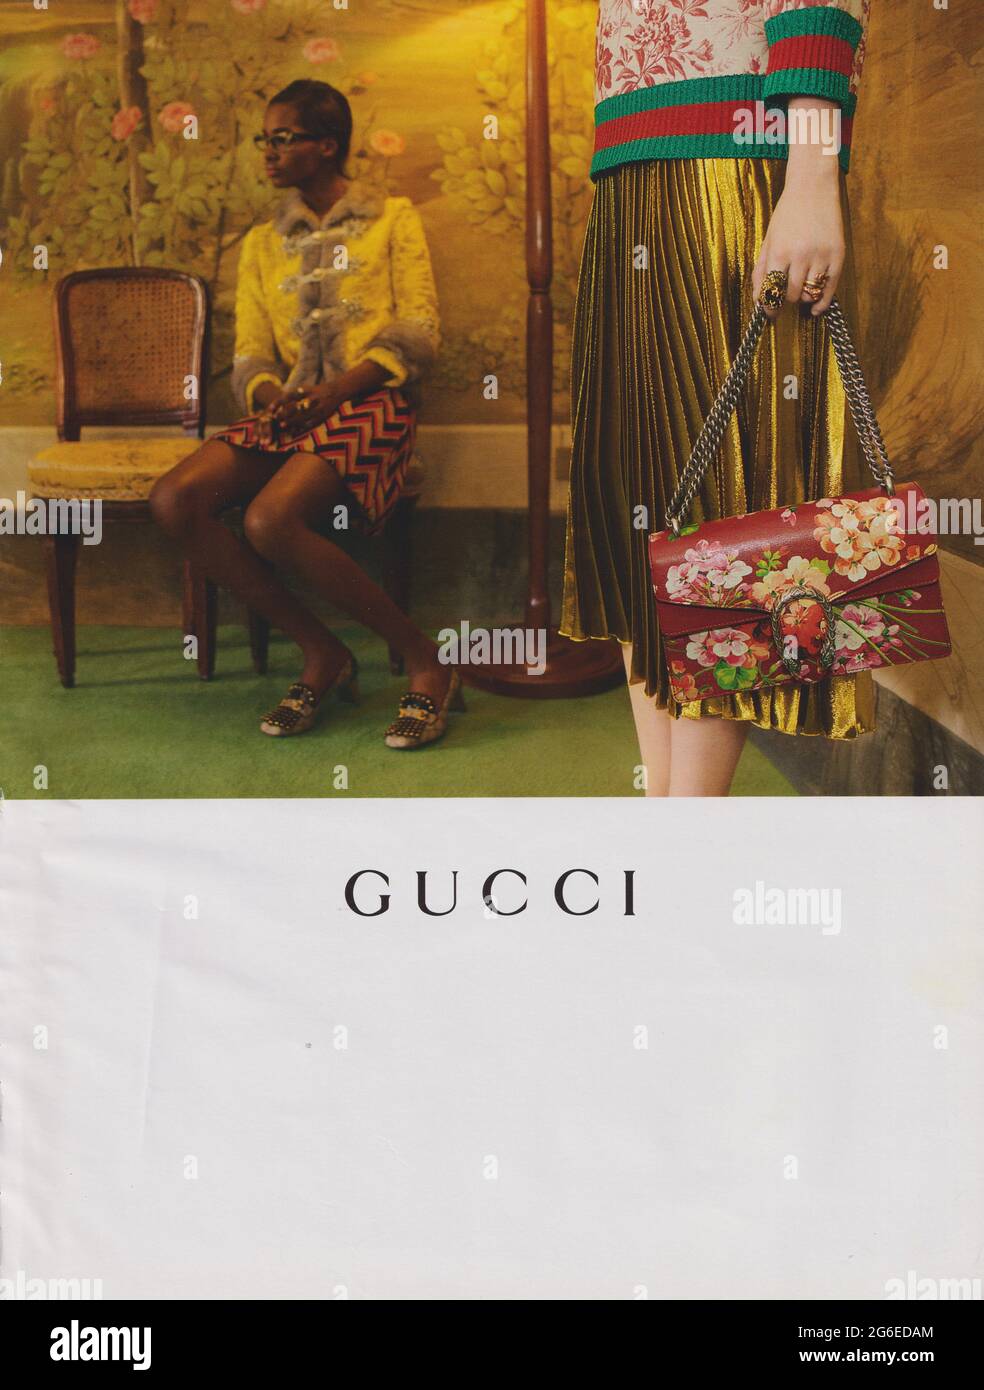 Gucci Advertisement Case Study